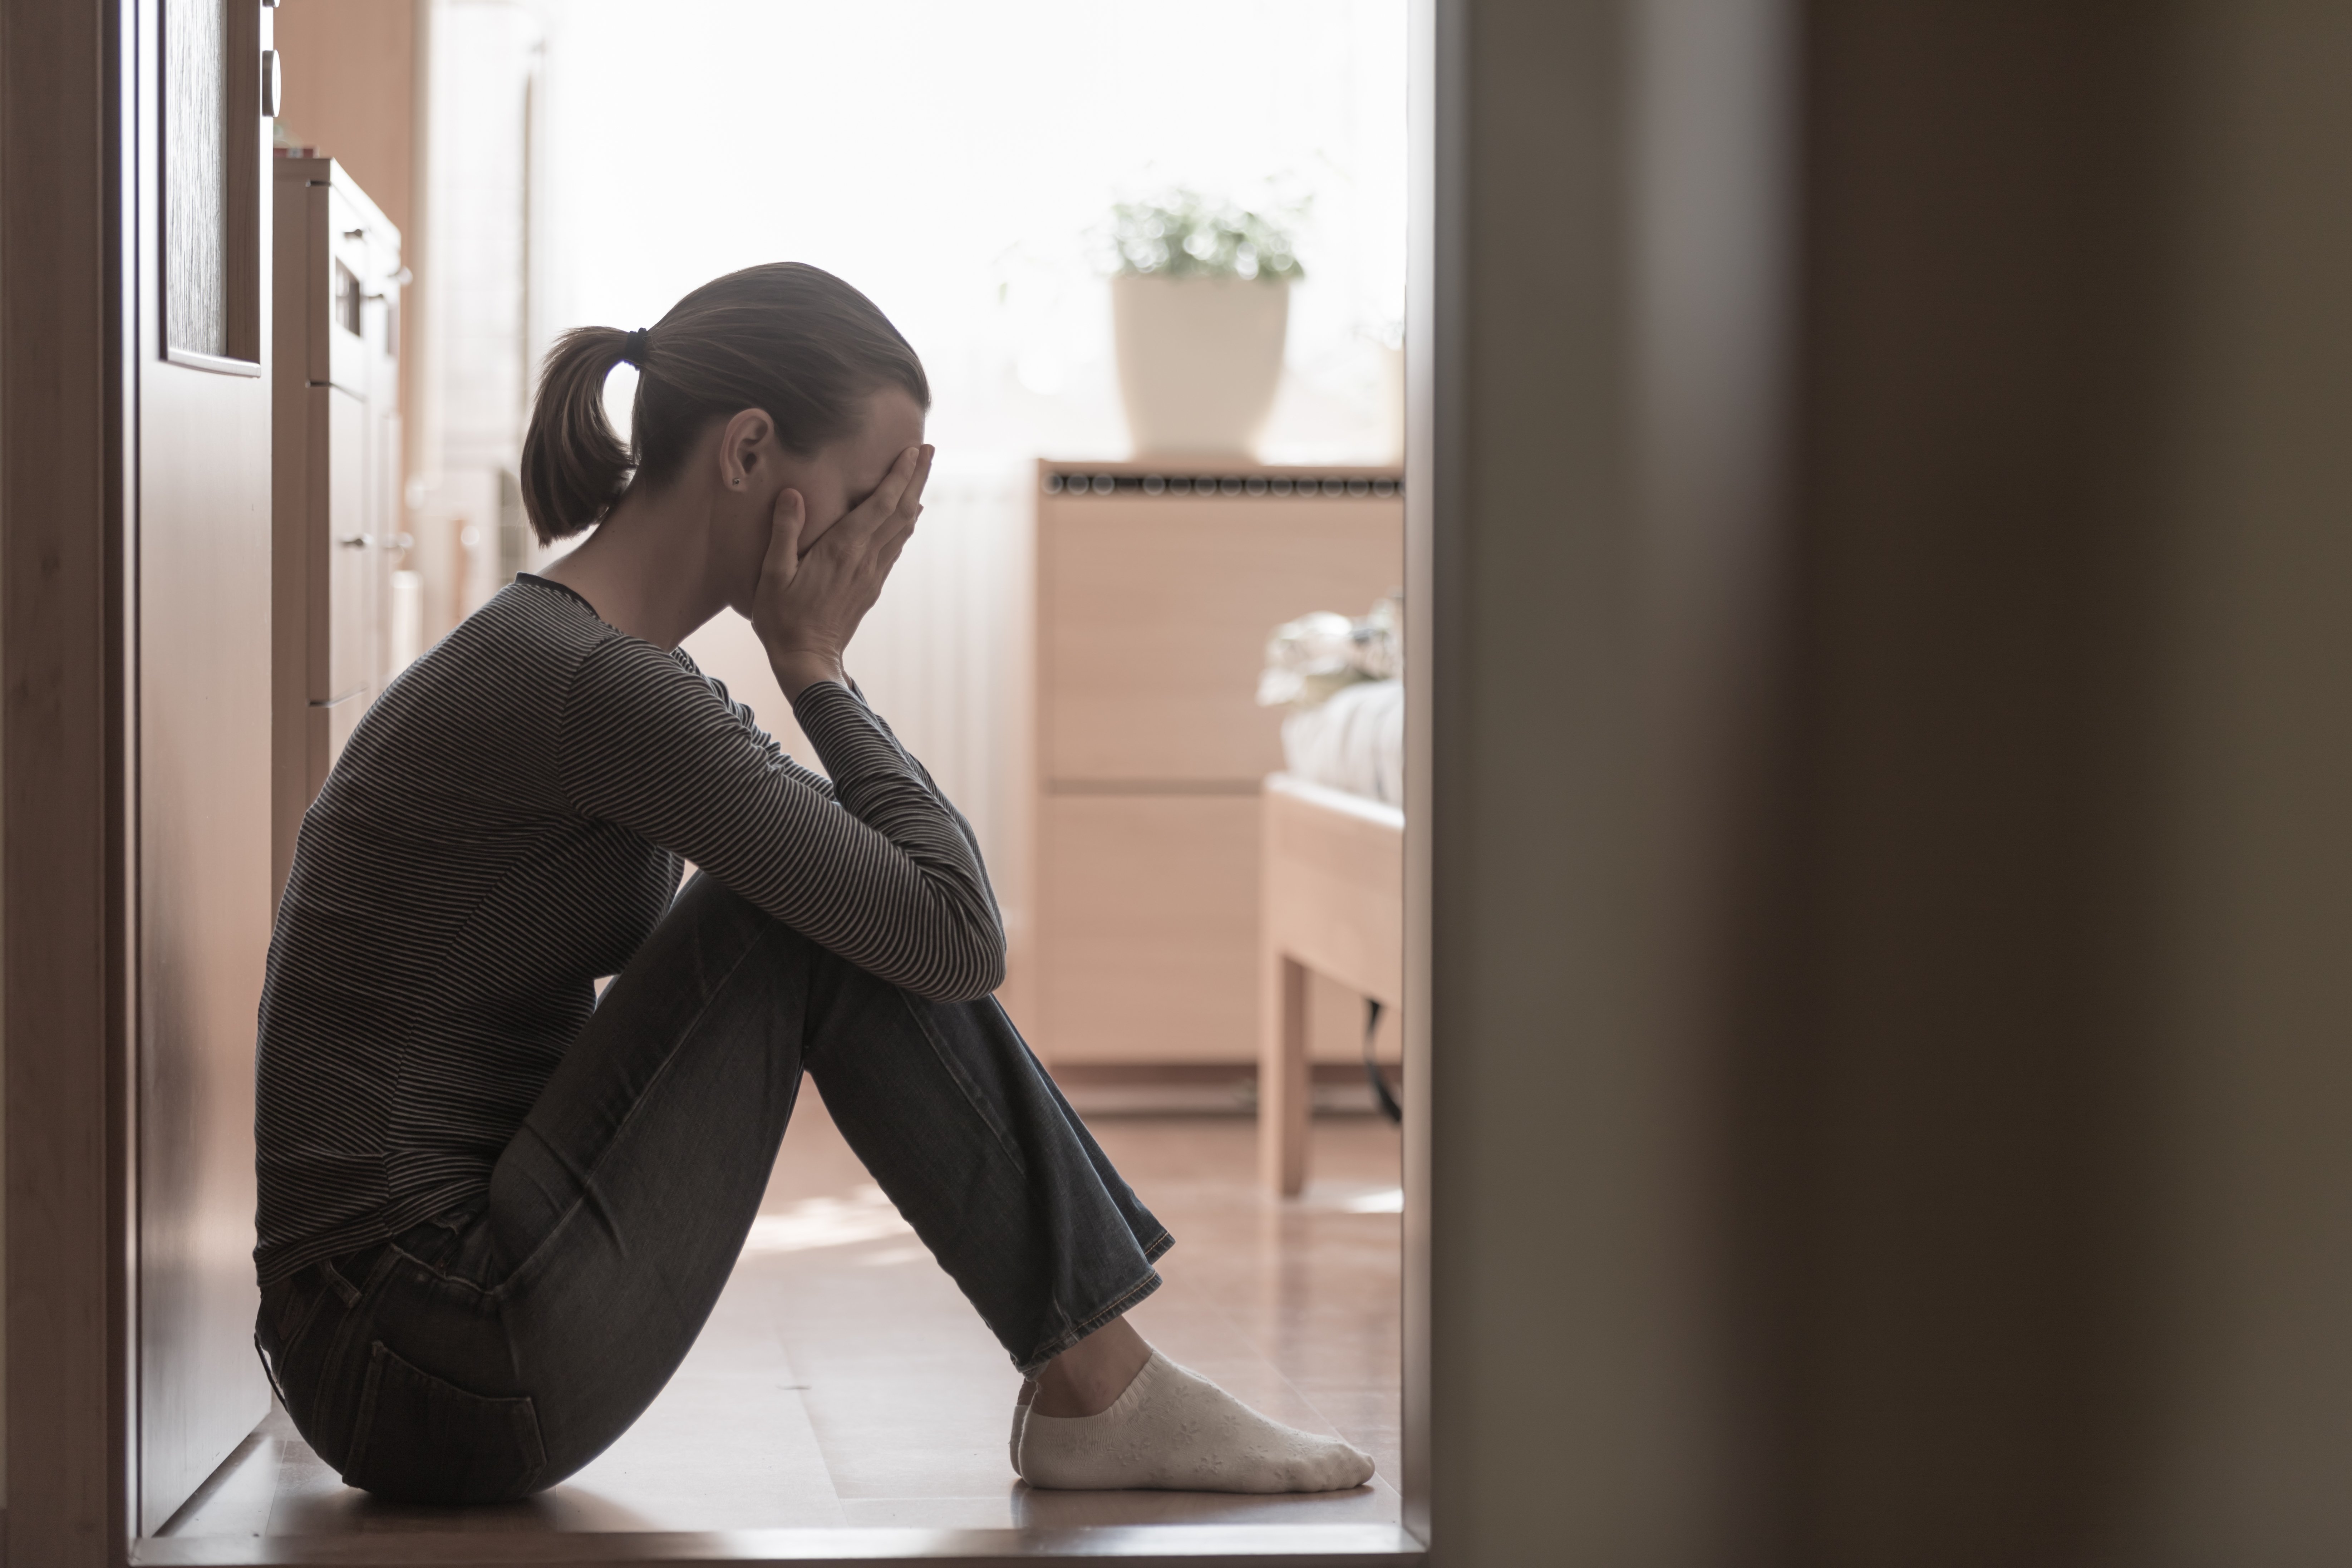 Broken hearted mom cries alone | Shutterstock